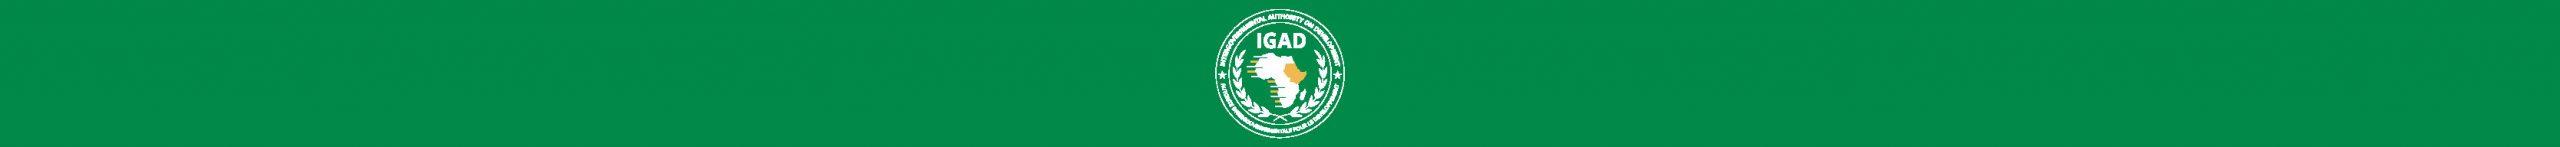 IGAD Embraces Migration And Development